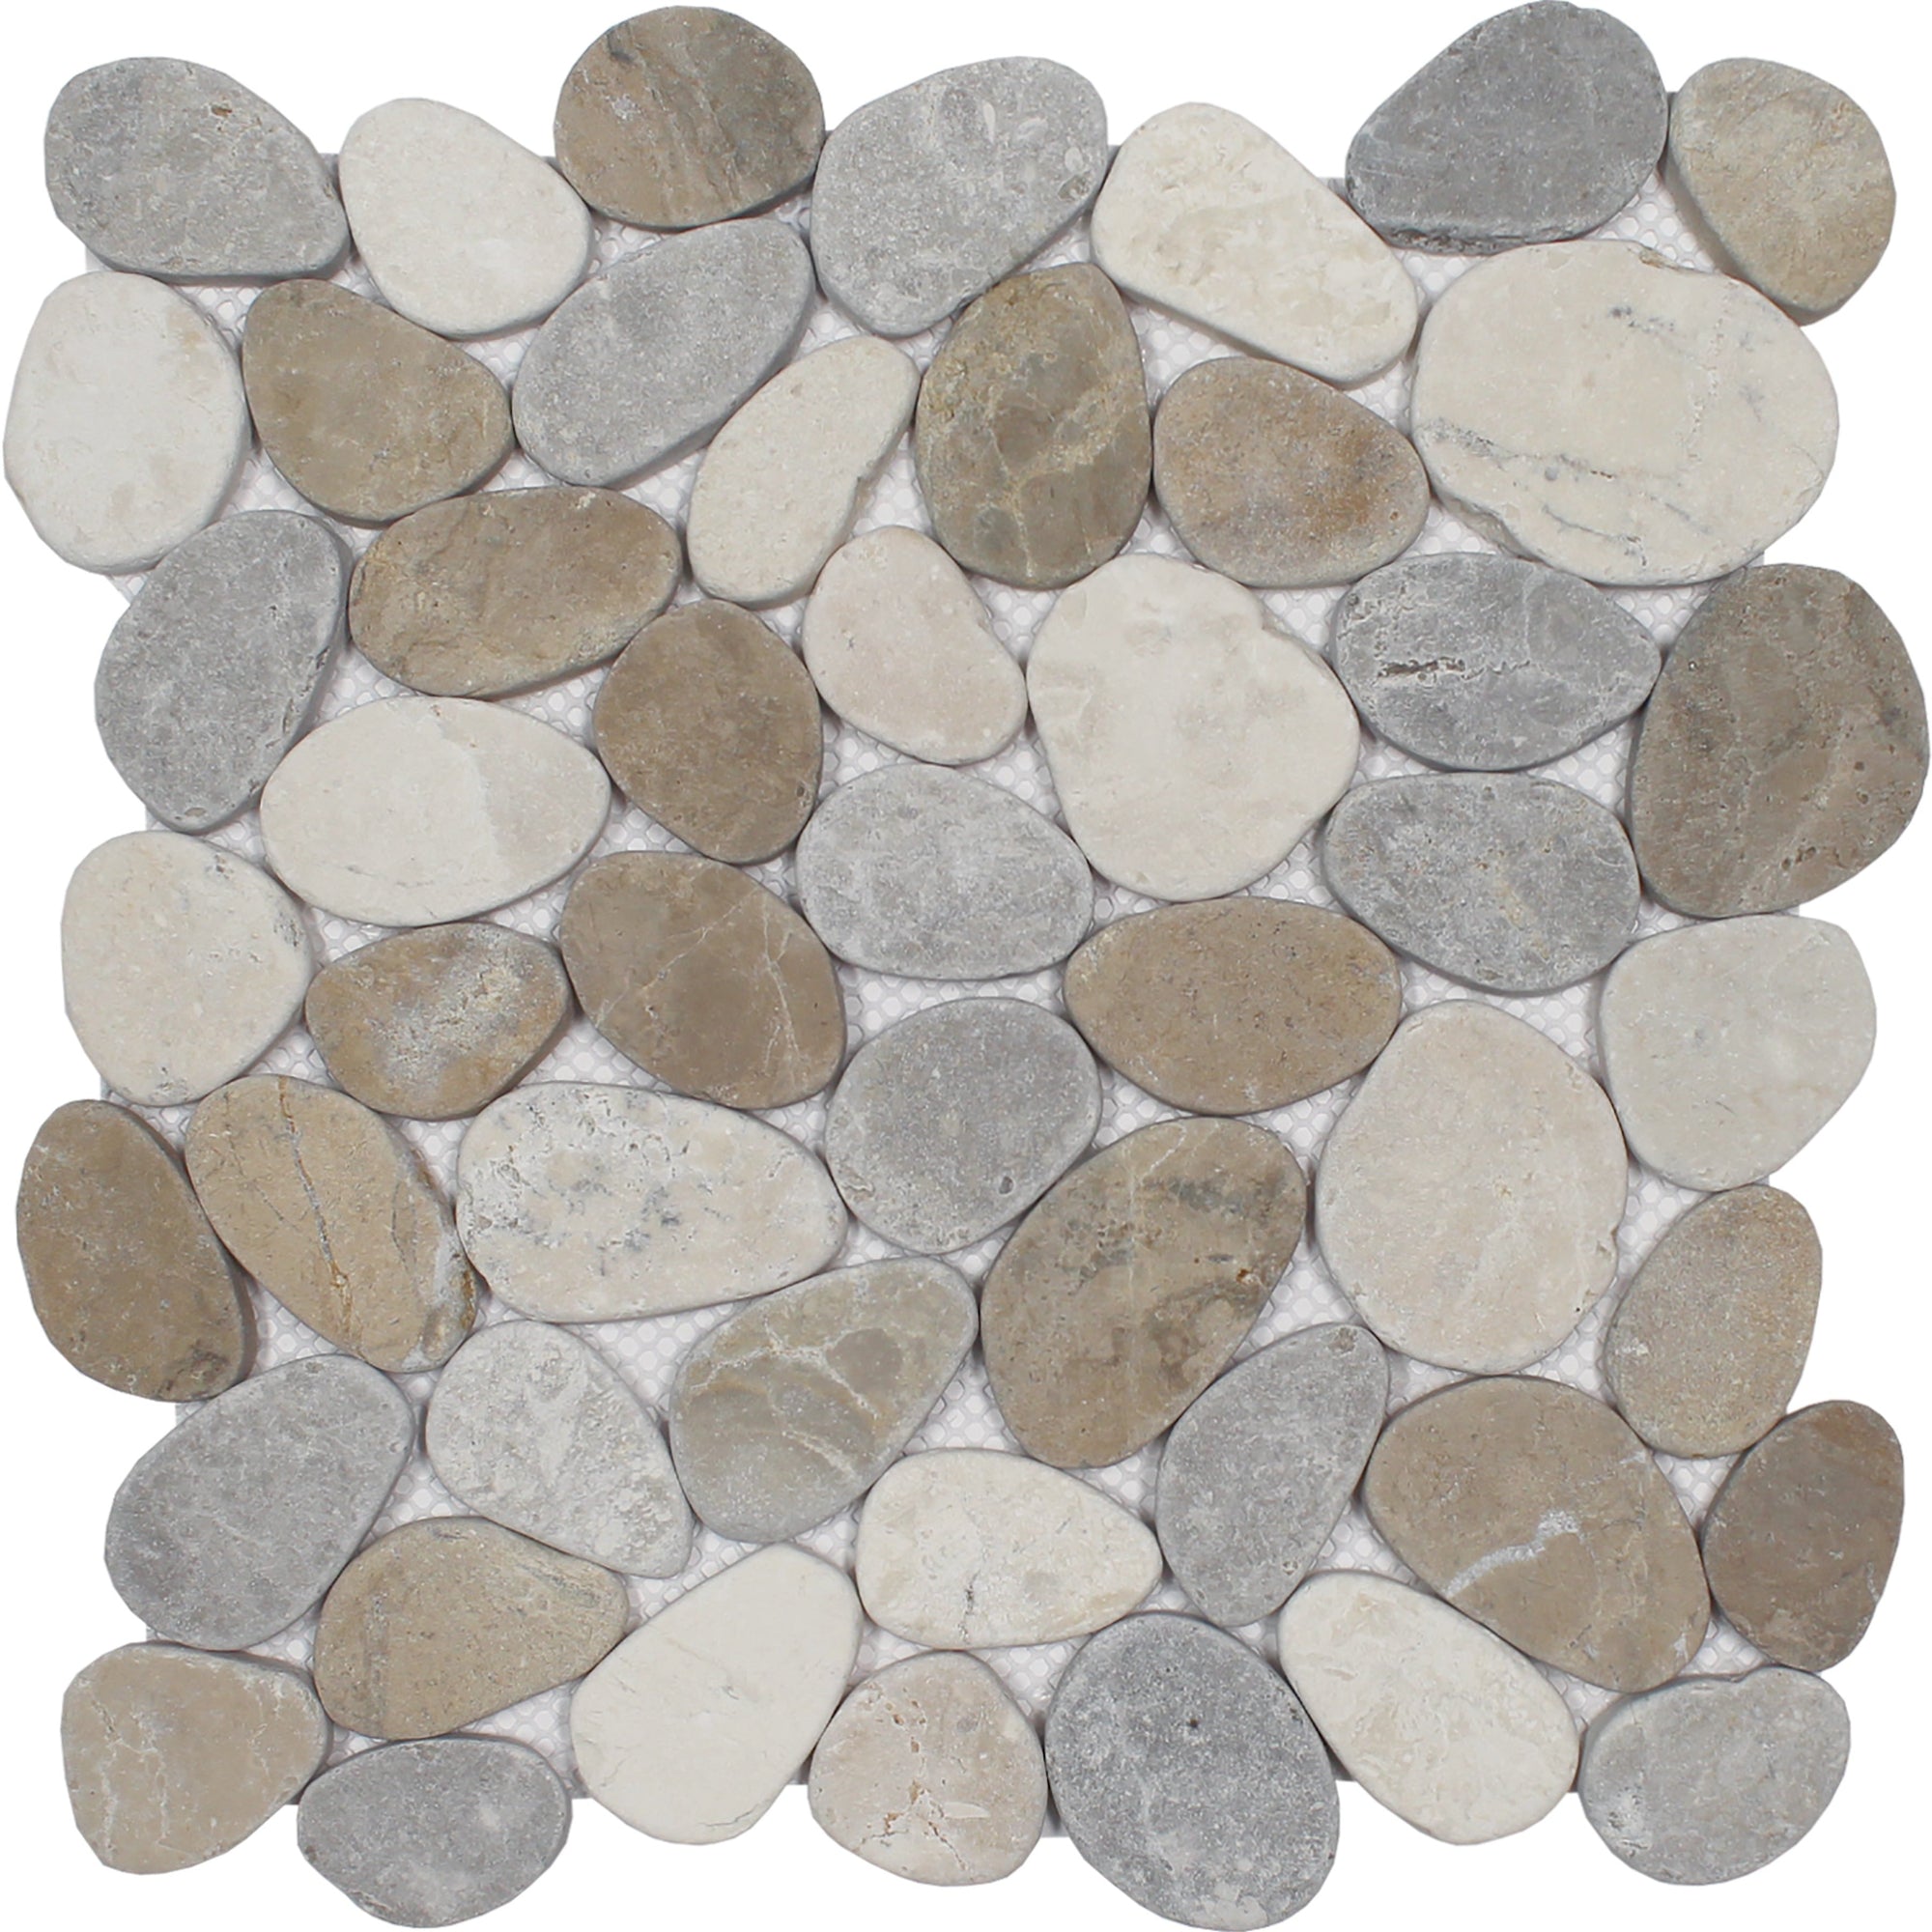 Tesoro - Ocean Stones Collection - Coin Pebble Mosaic - Light Grey, Tan, and White